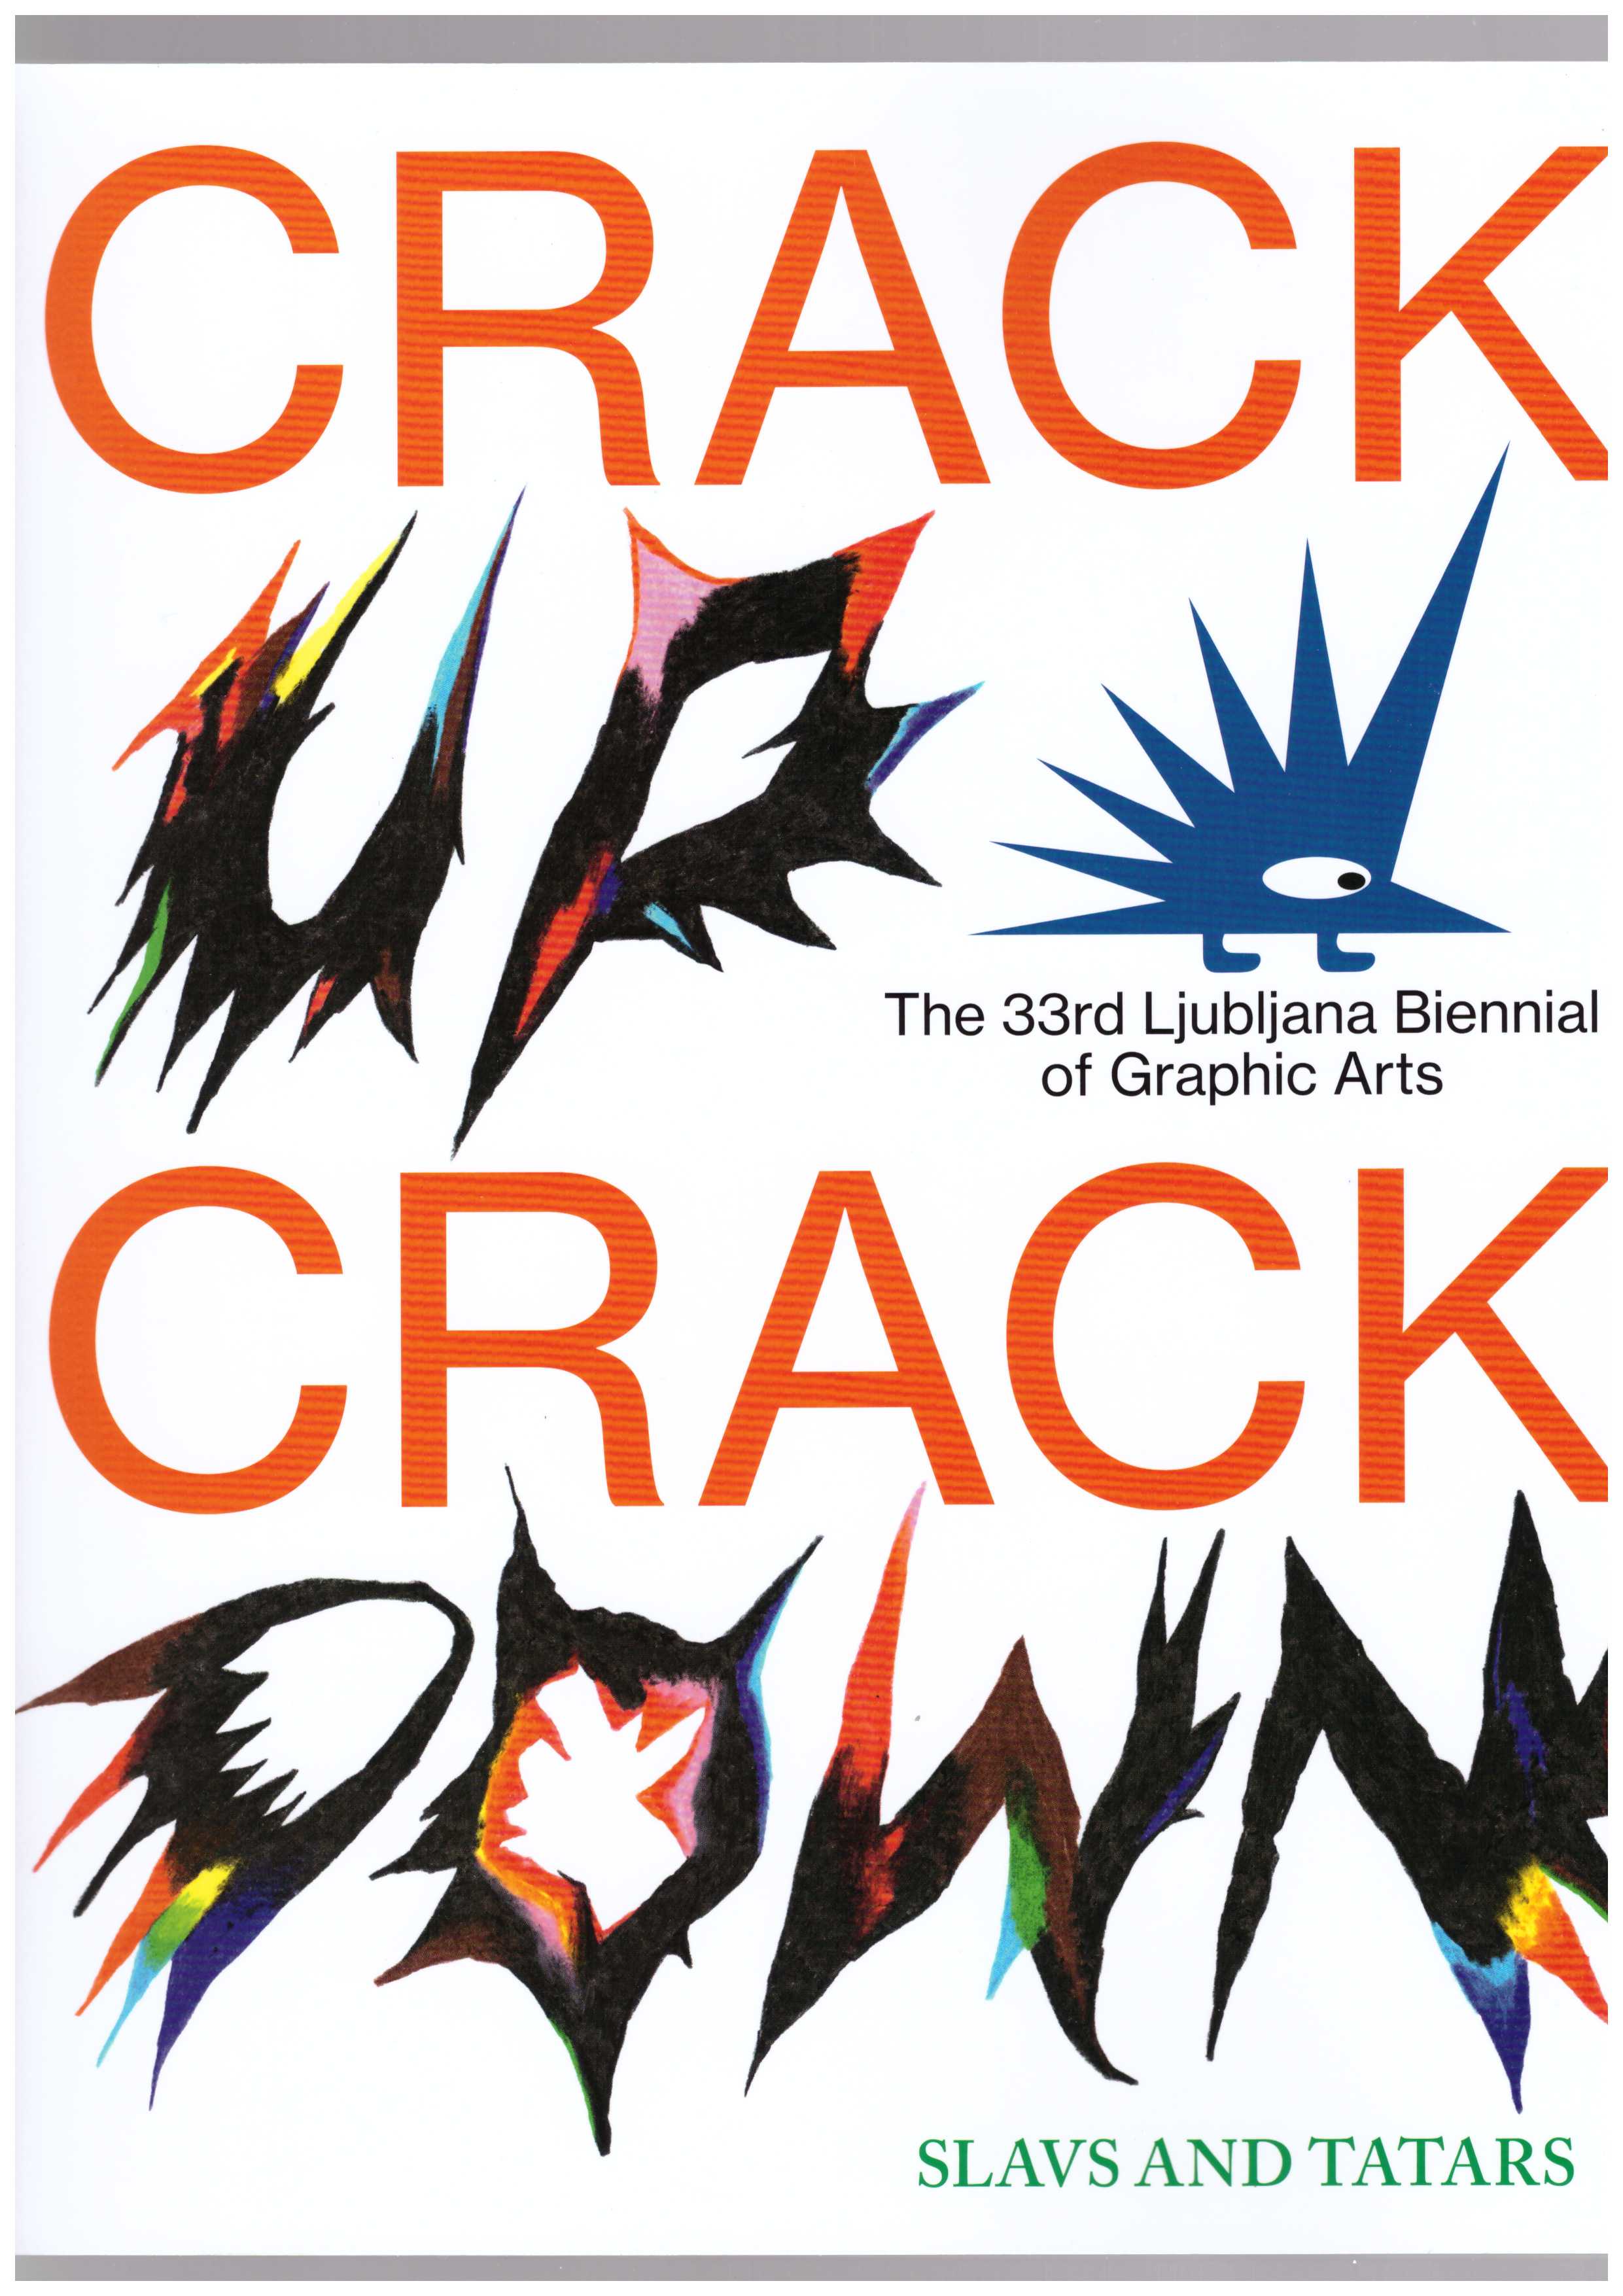 SLAVS AND TATARS (ed.) - Crack Up – Crack Down – The 33rd Ljubljana Biennial of Graphic Arts